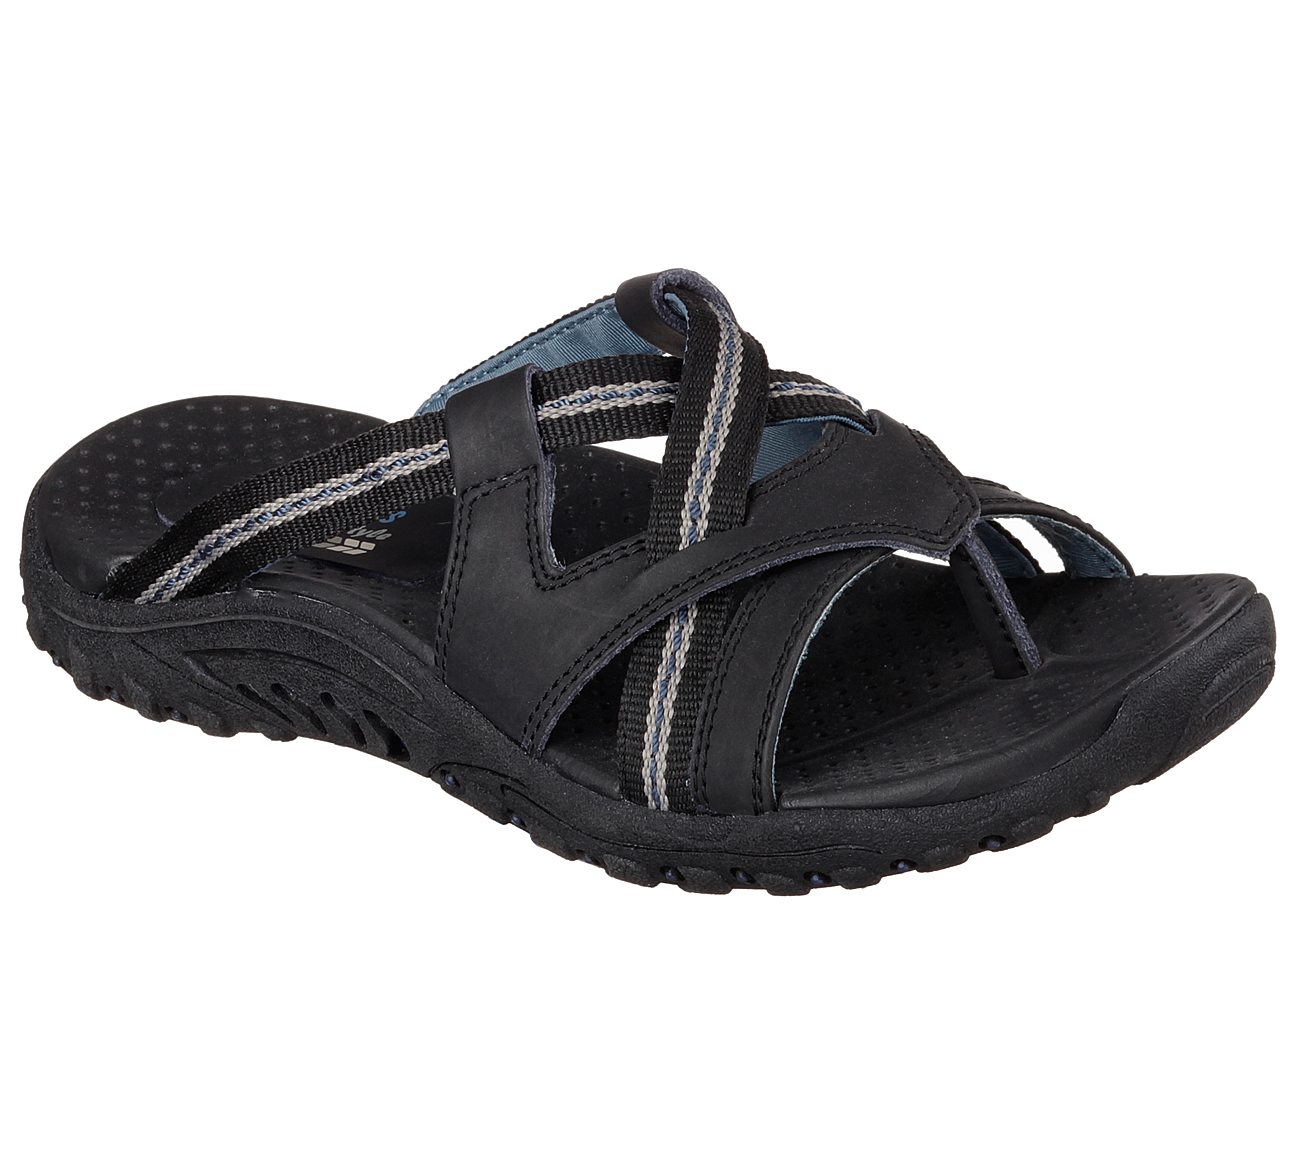 sketcher sandals discontinued